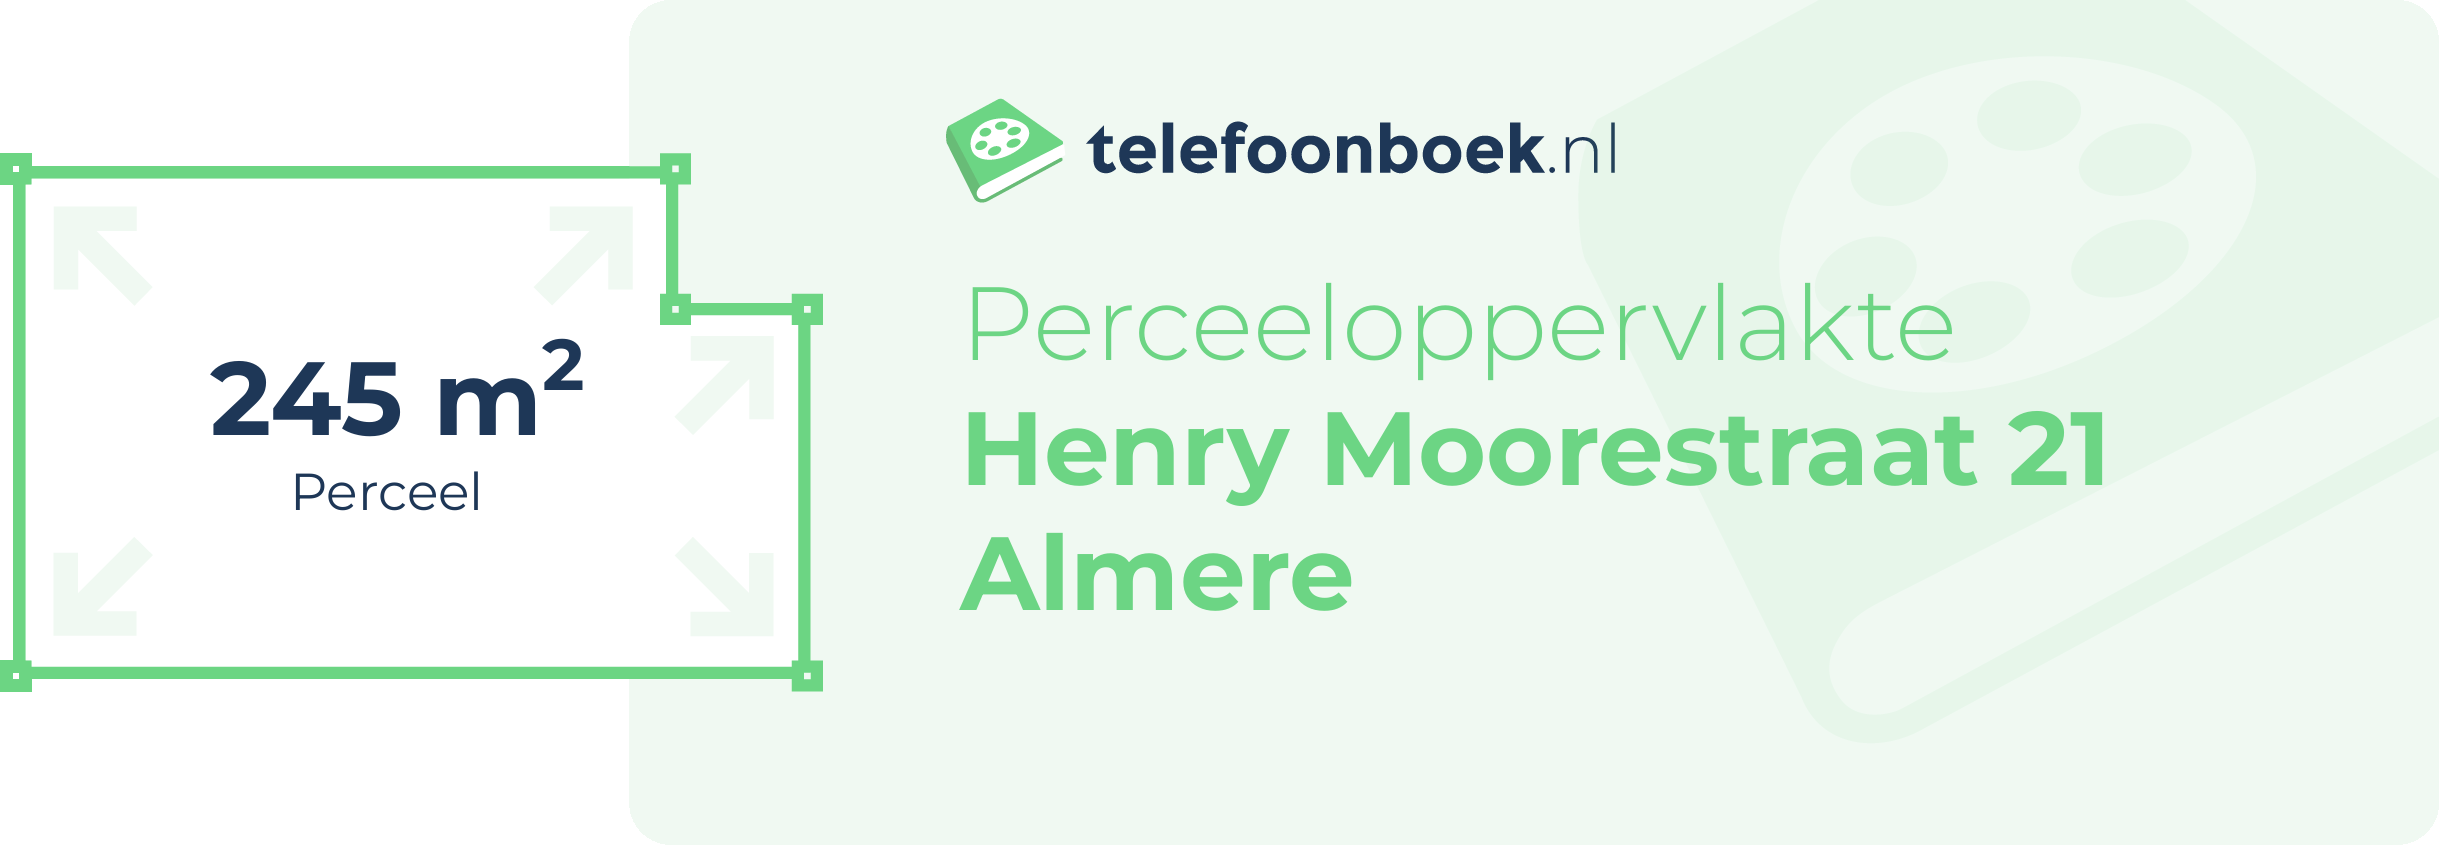 Perceeloppervlakte Henry Moorestraat 21 Almere